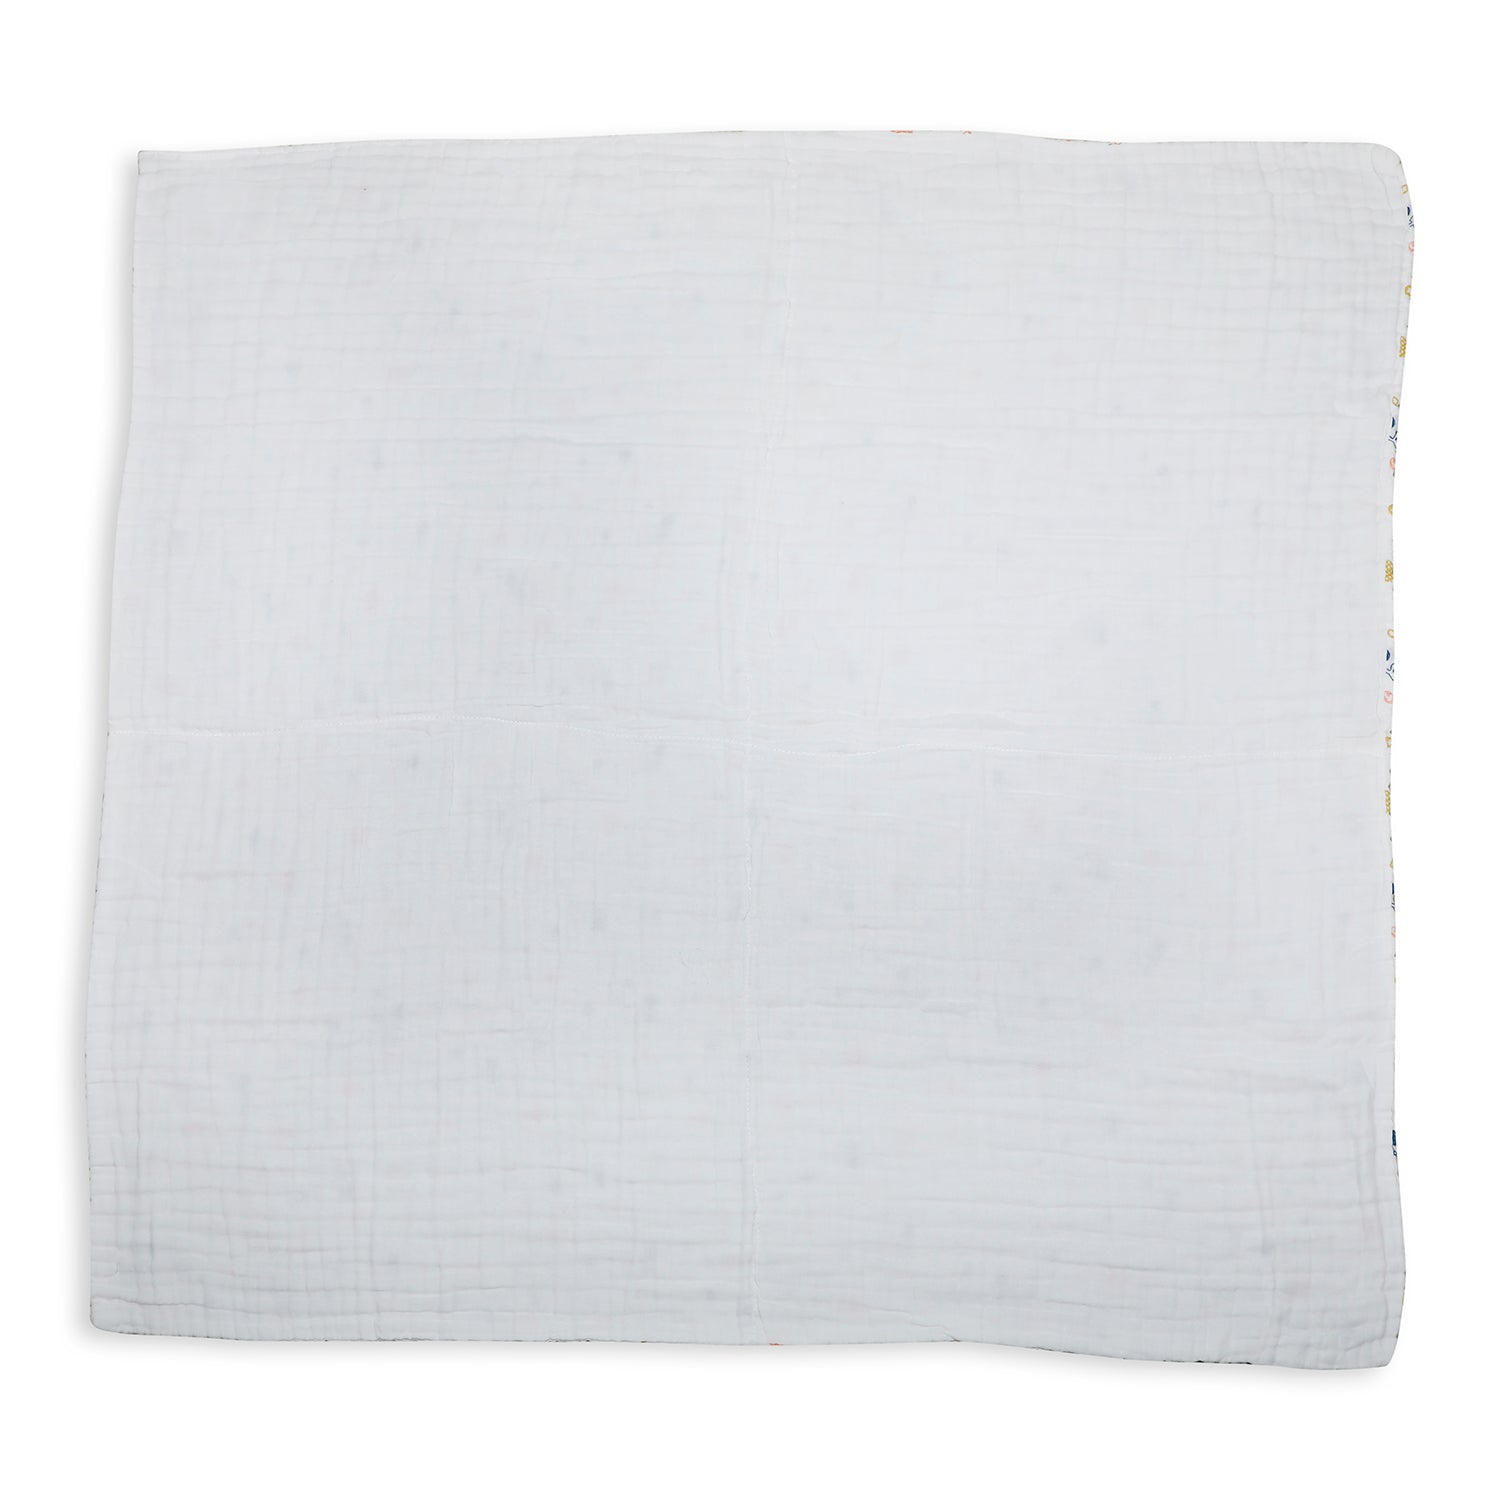 Printed White Muslin Small Blanket